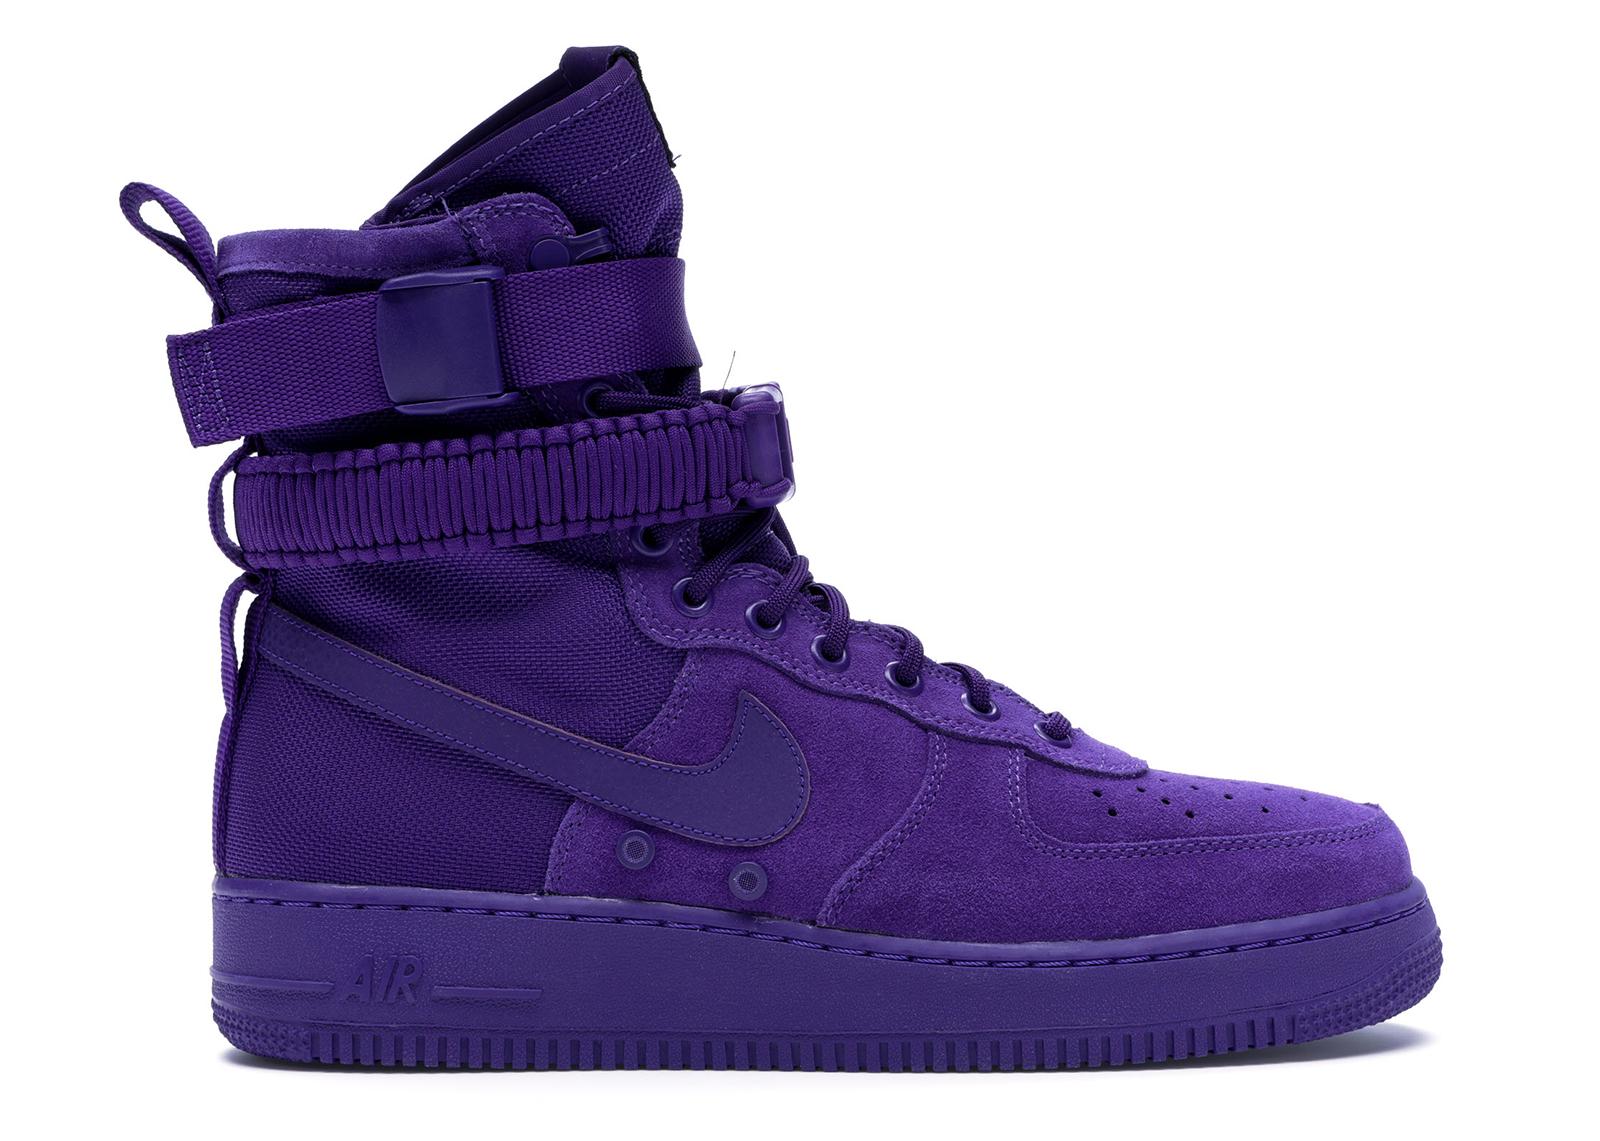 nike air force high purple